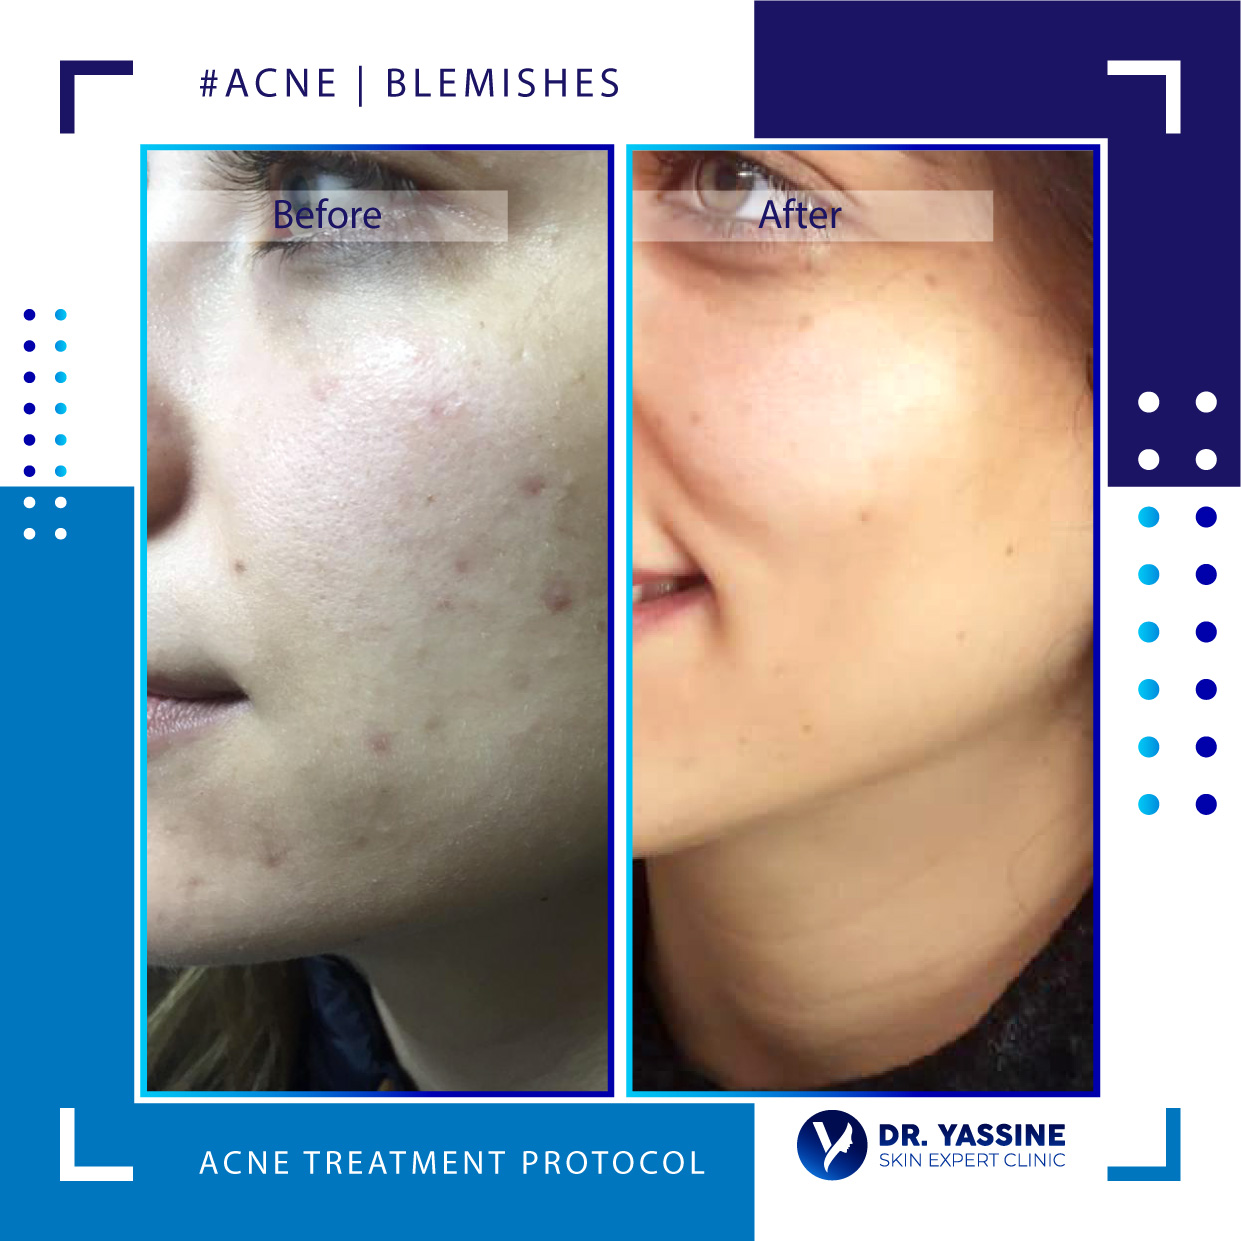 acne treatment protocol results